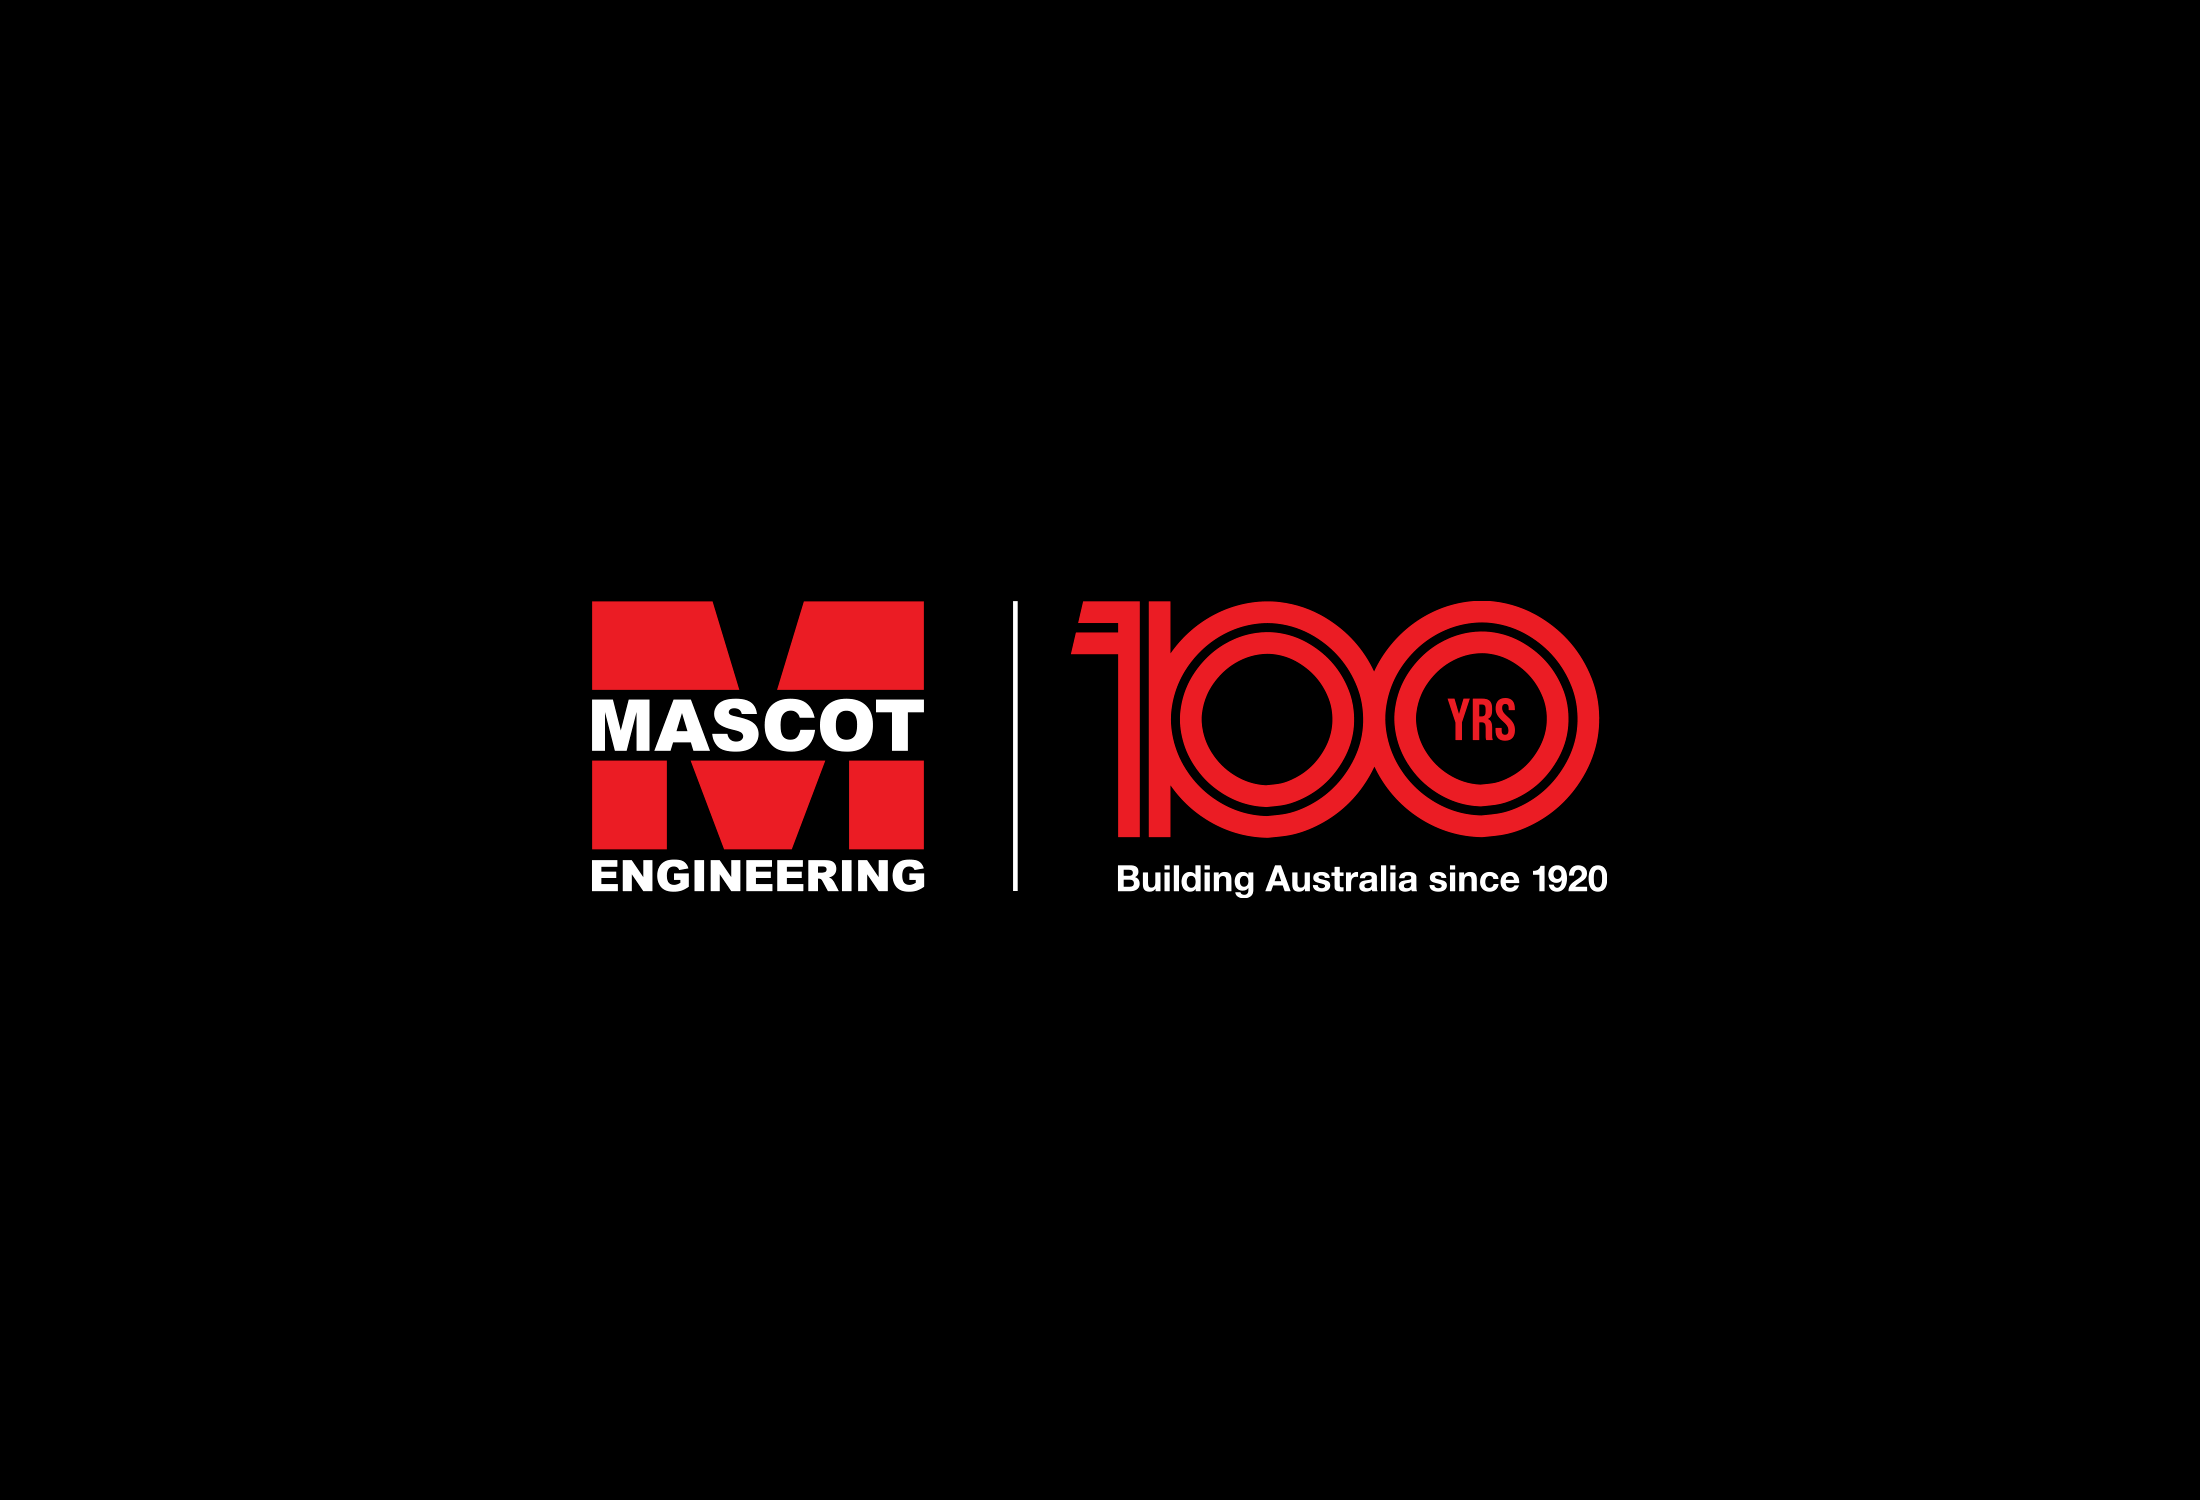 Mascot Engineering Australia